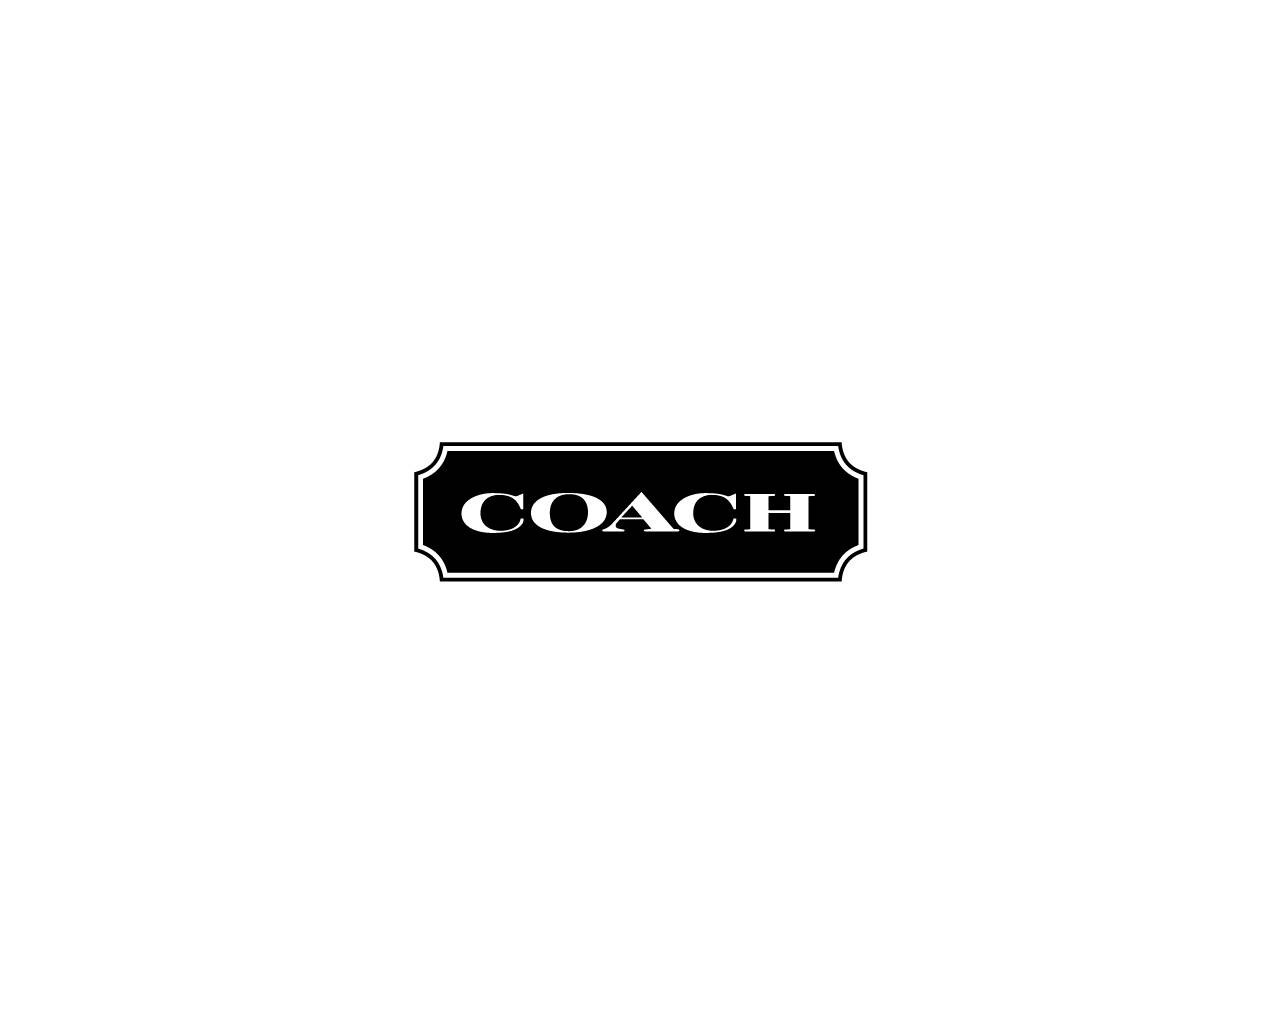 Coach Name Logo In White Background